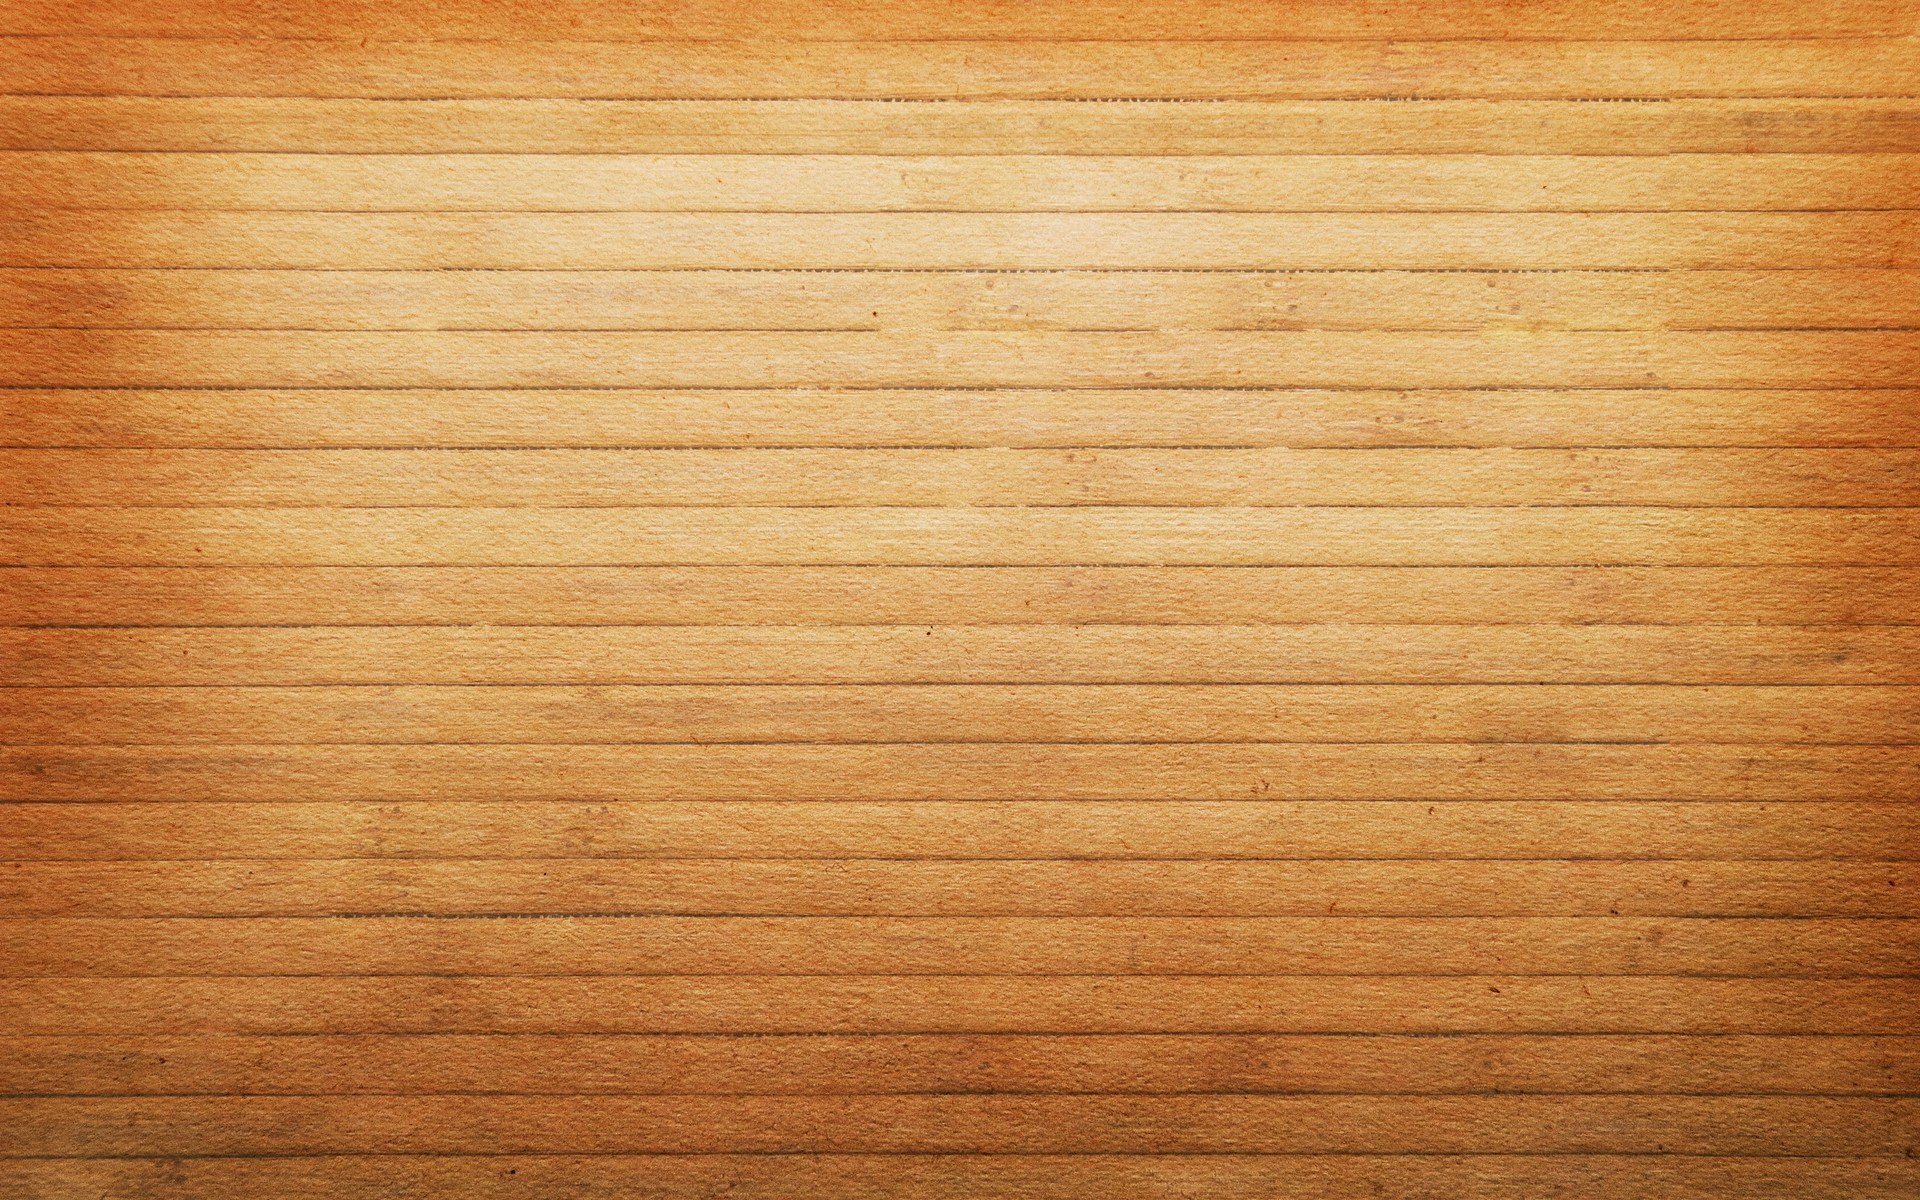 Faux Wood Grain Wallpaper for Walls | White Wood Grain